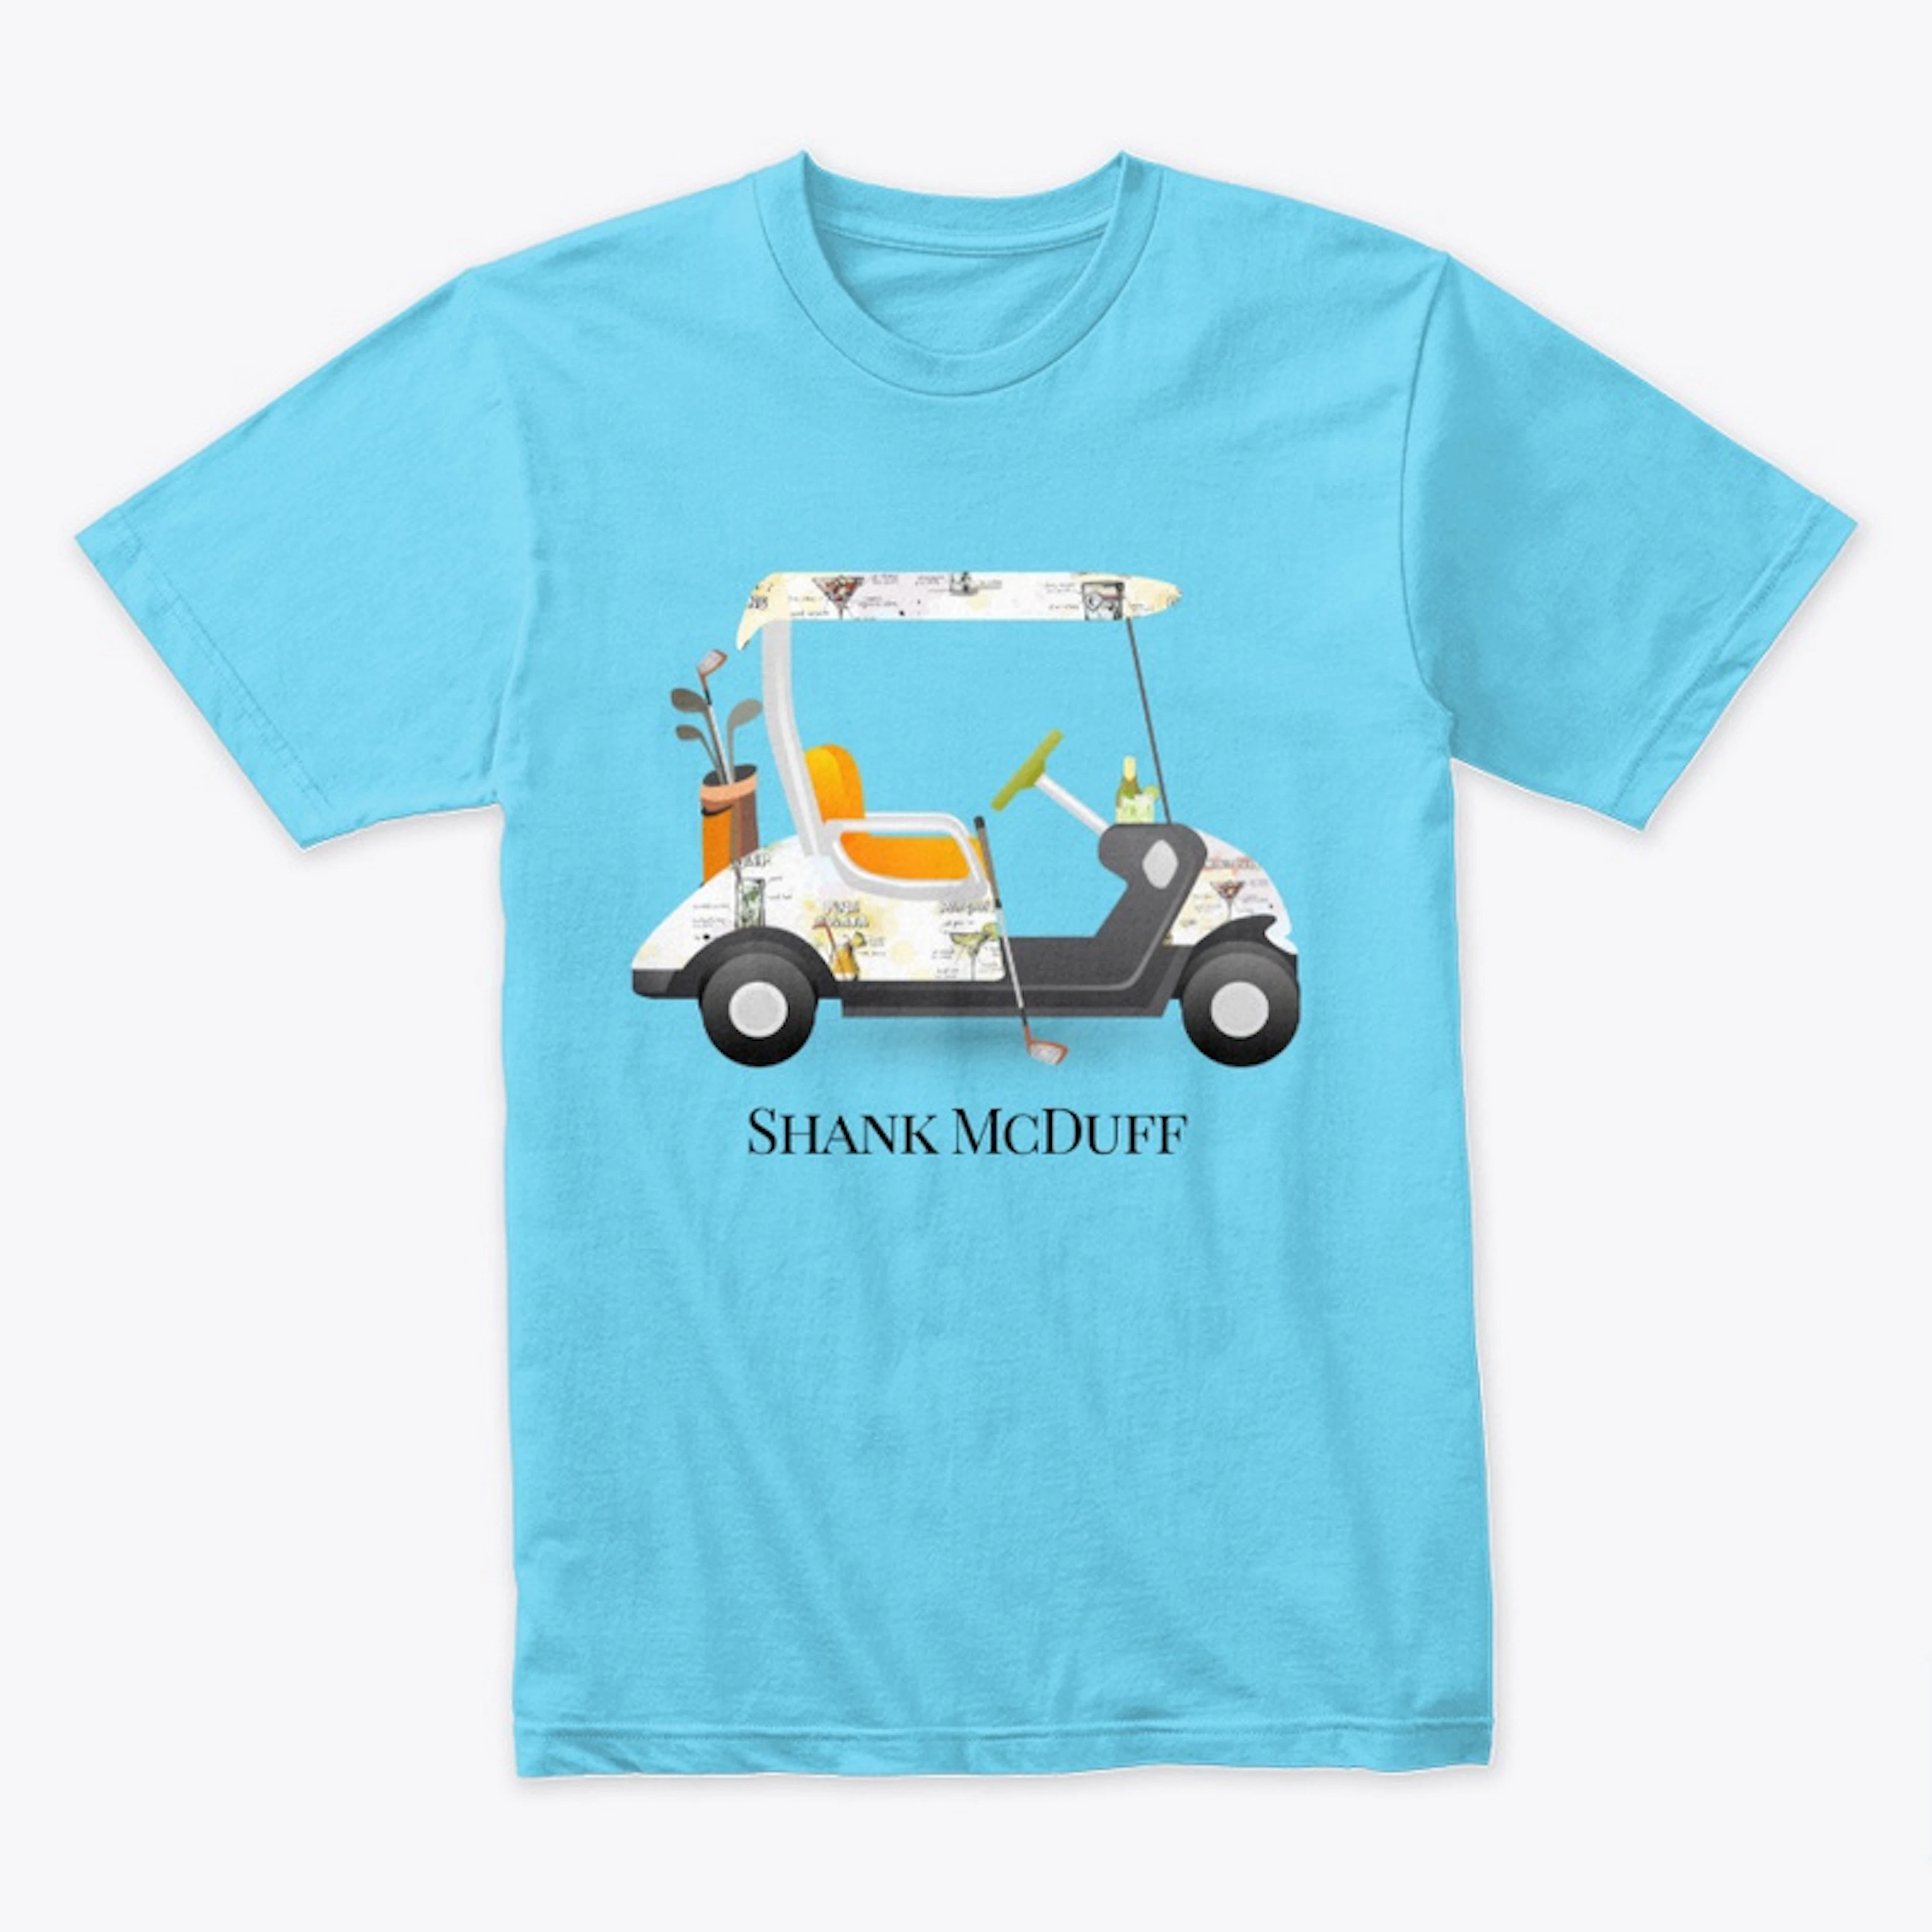 Weekend Vibes - Golf Cart Tee